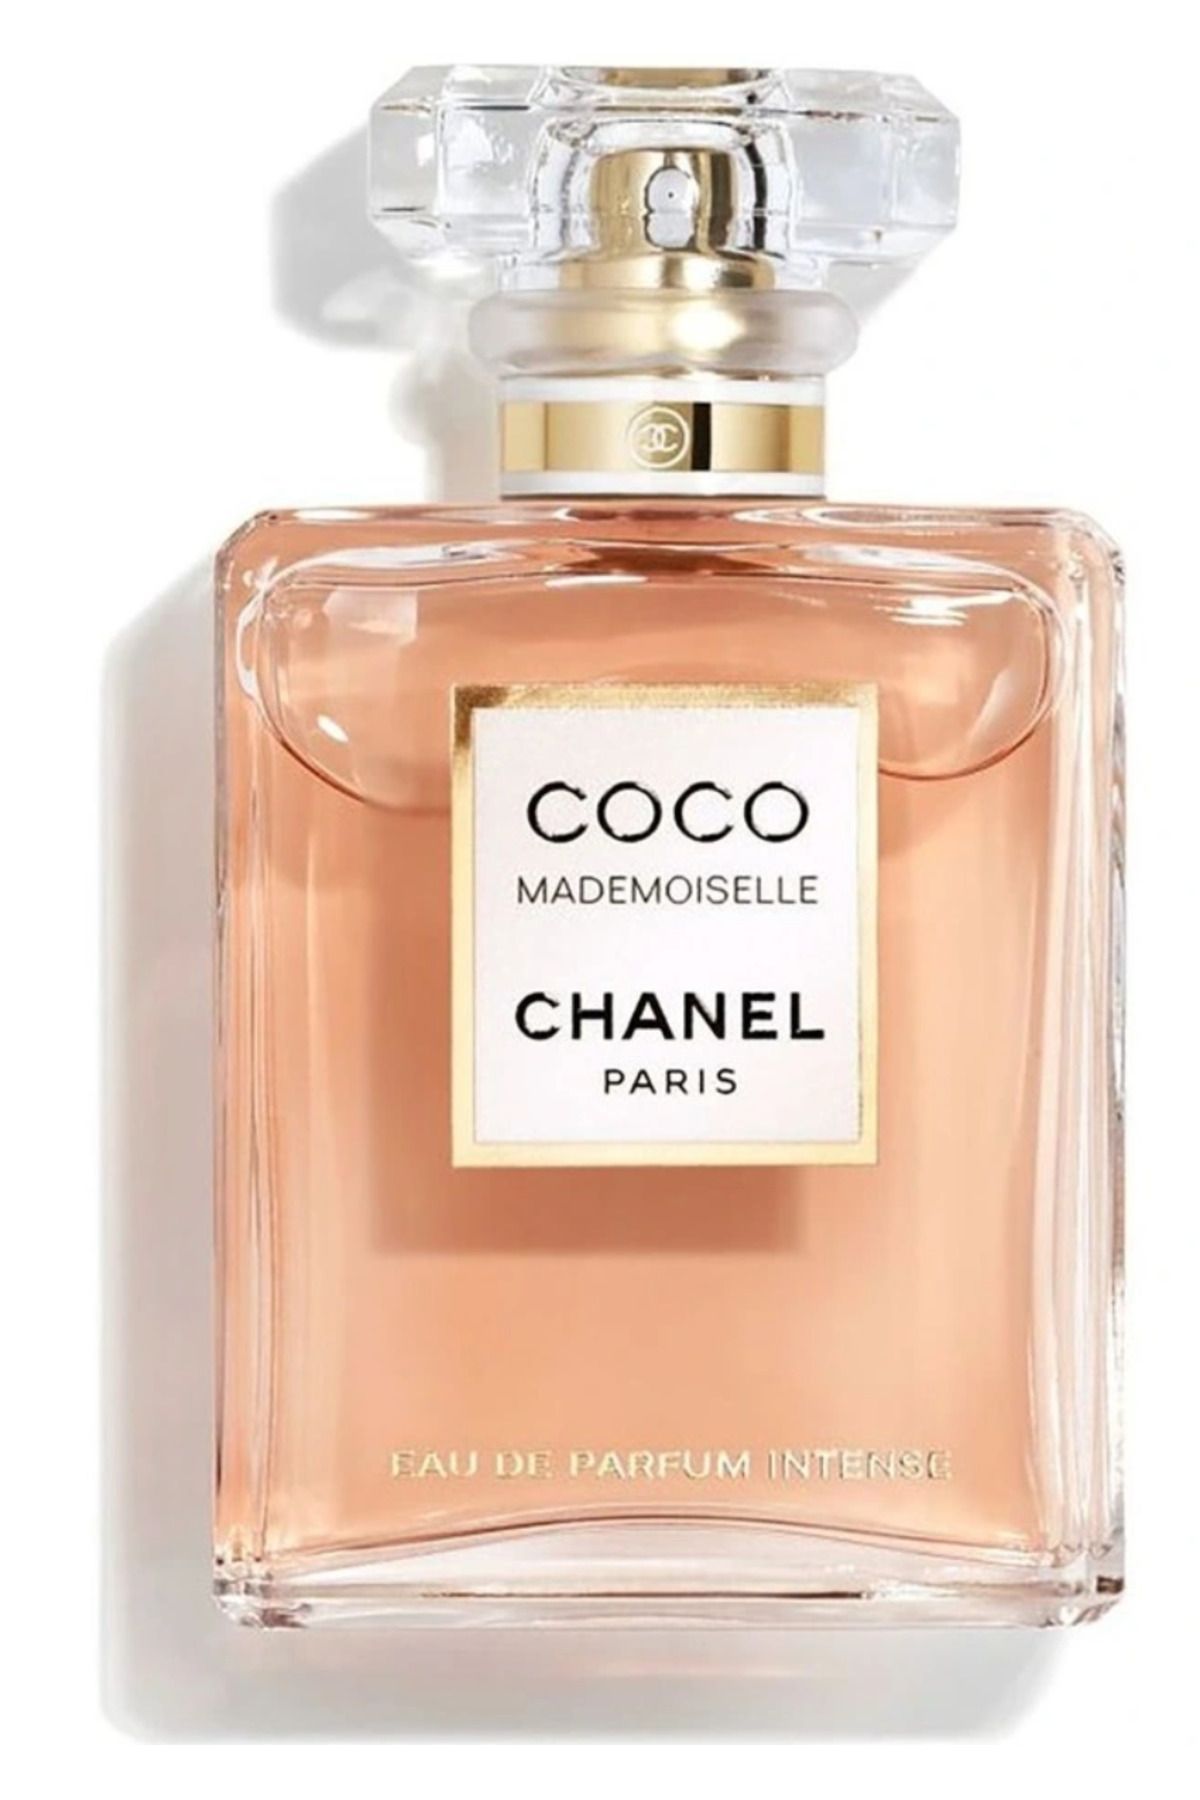 Chanel Coco Mademoıselle Eau de Parfum Intense 35 Ml